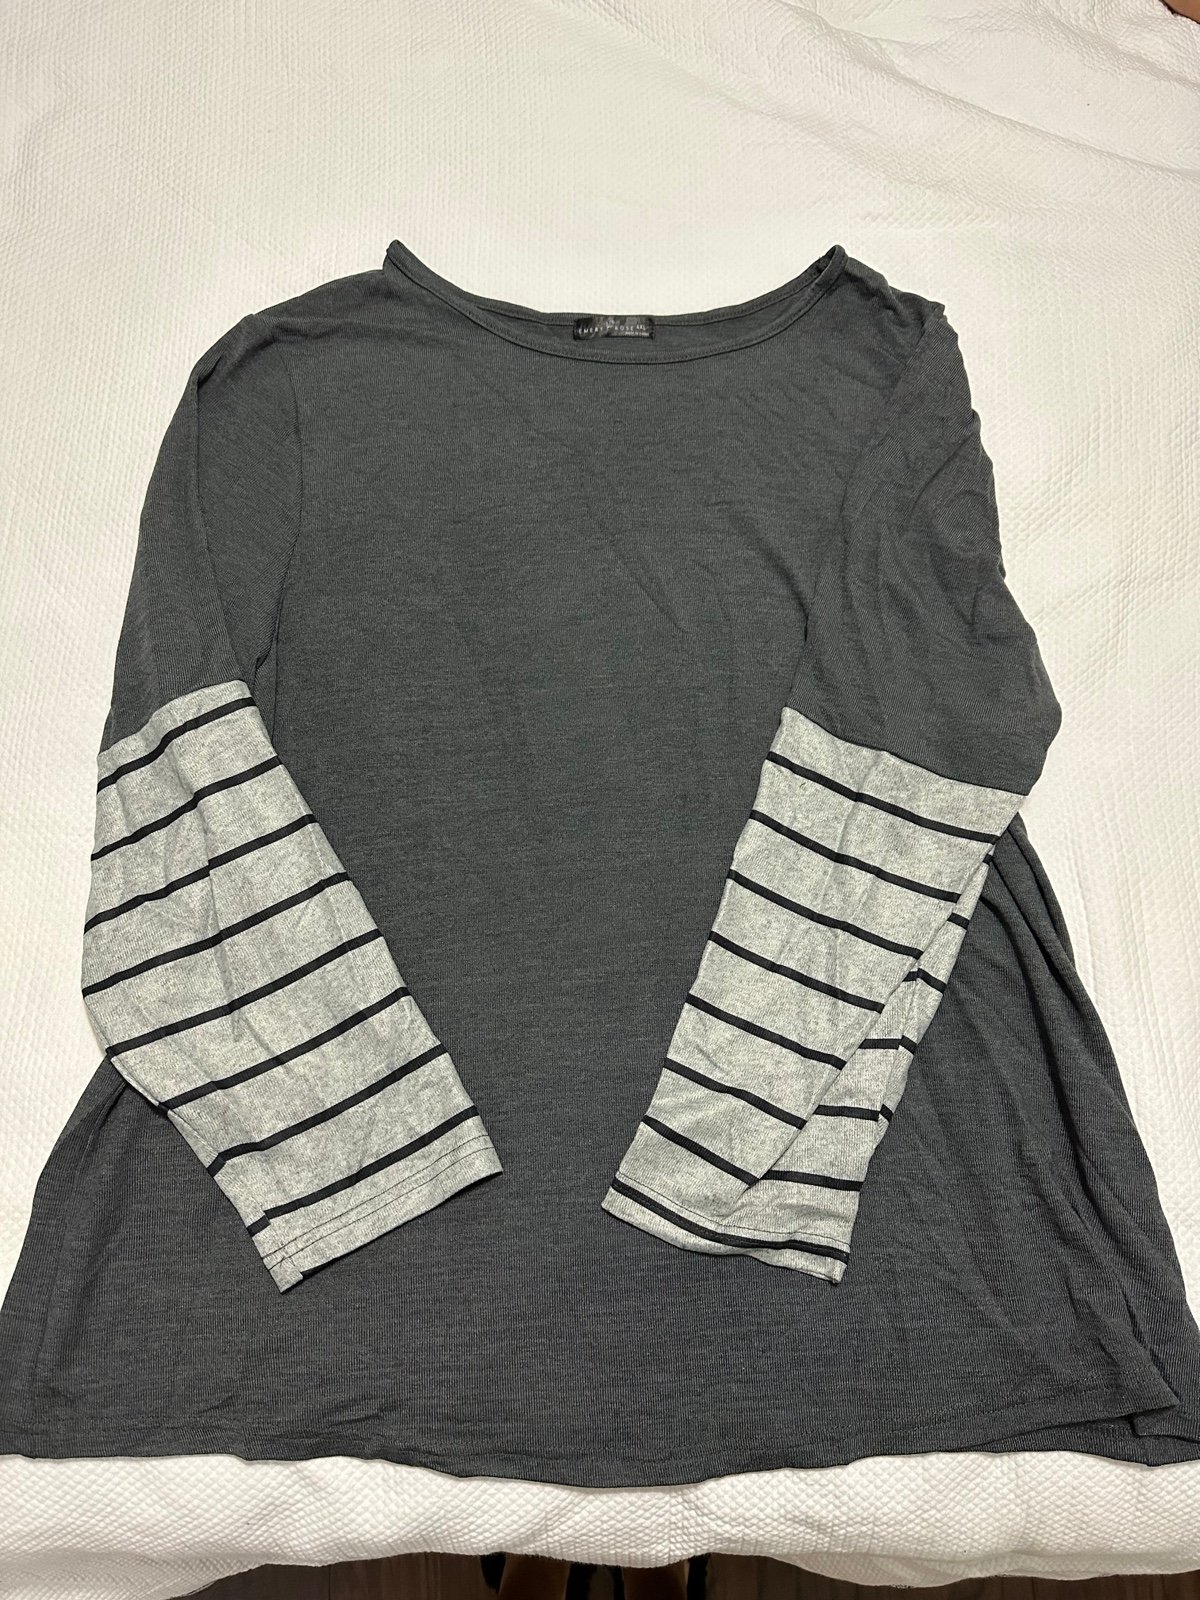 Nice Women’s Gray Sweater - 4XL JNMD9jaM6 Low Price